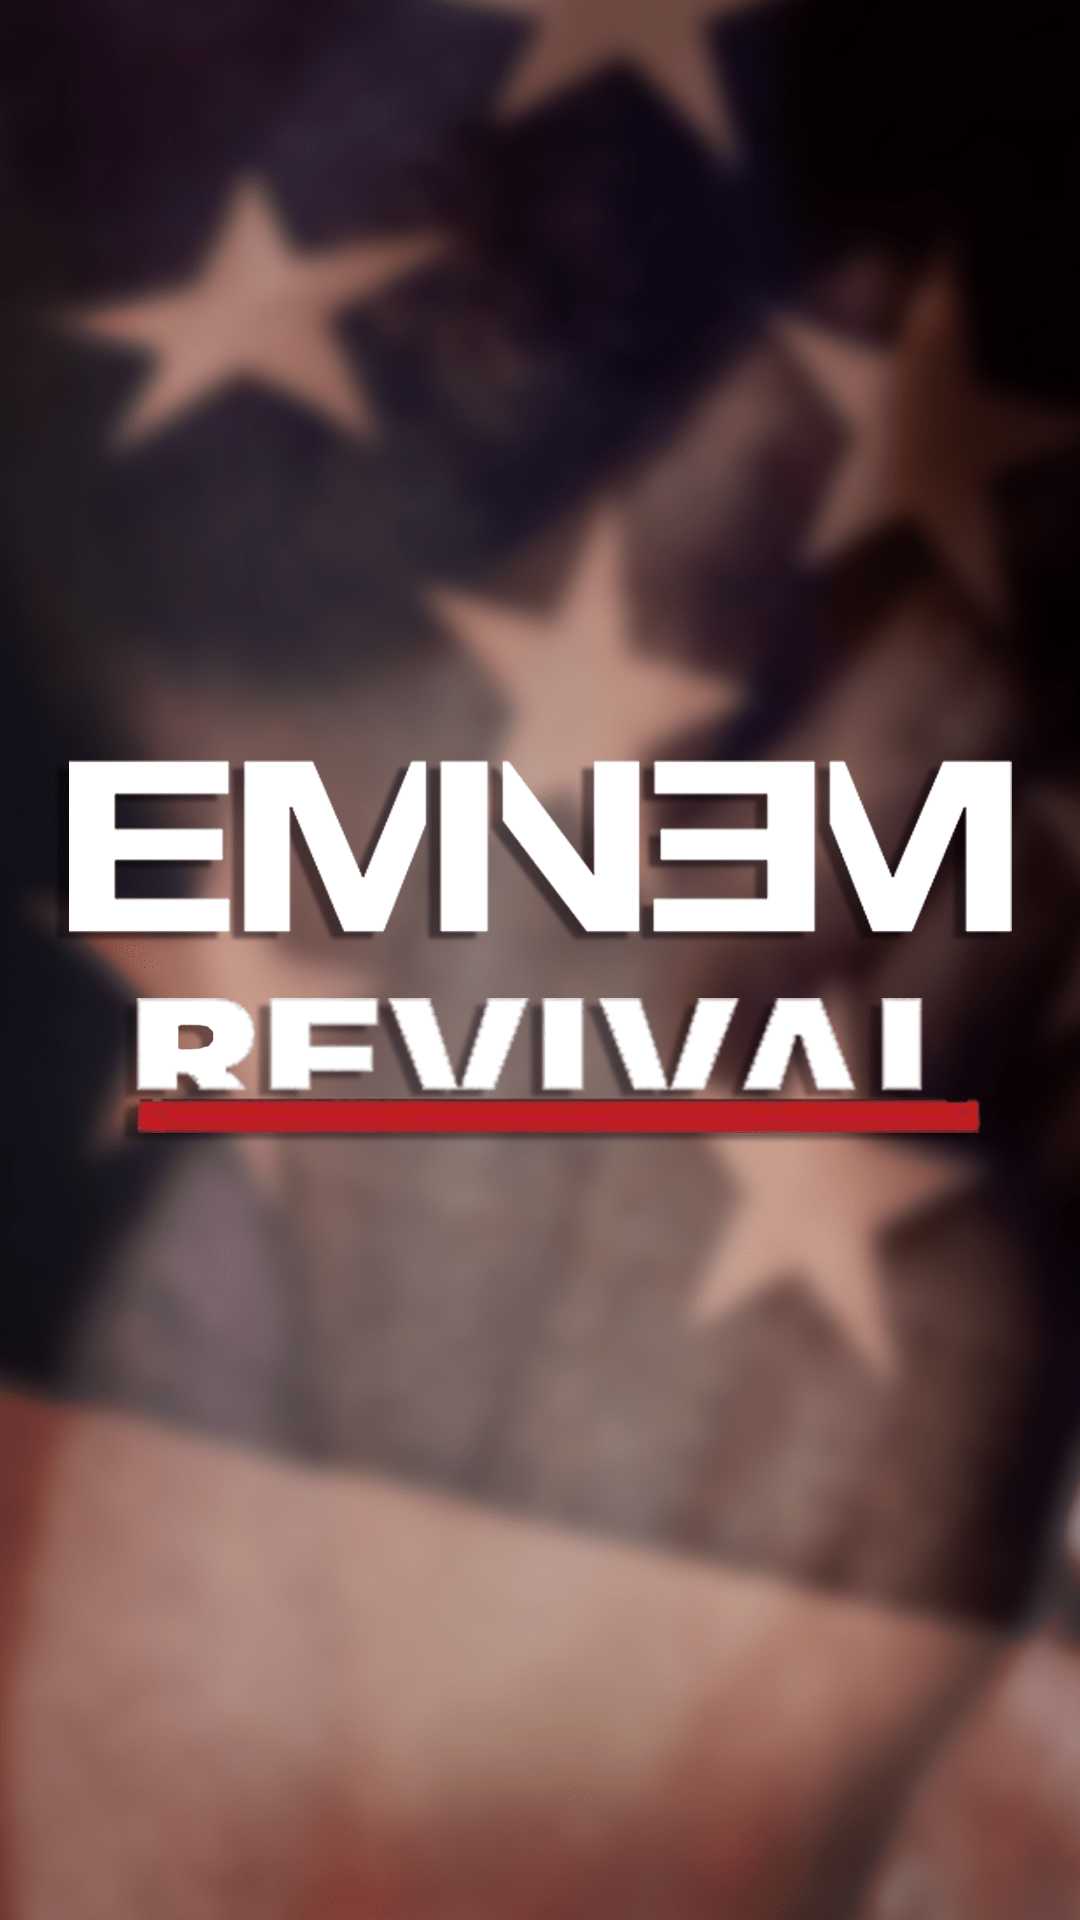 eminem revival album download free